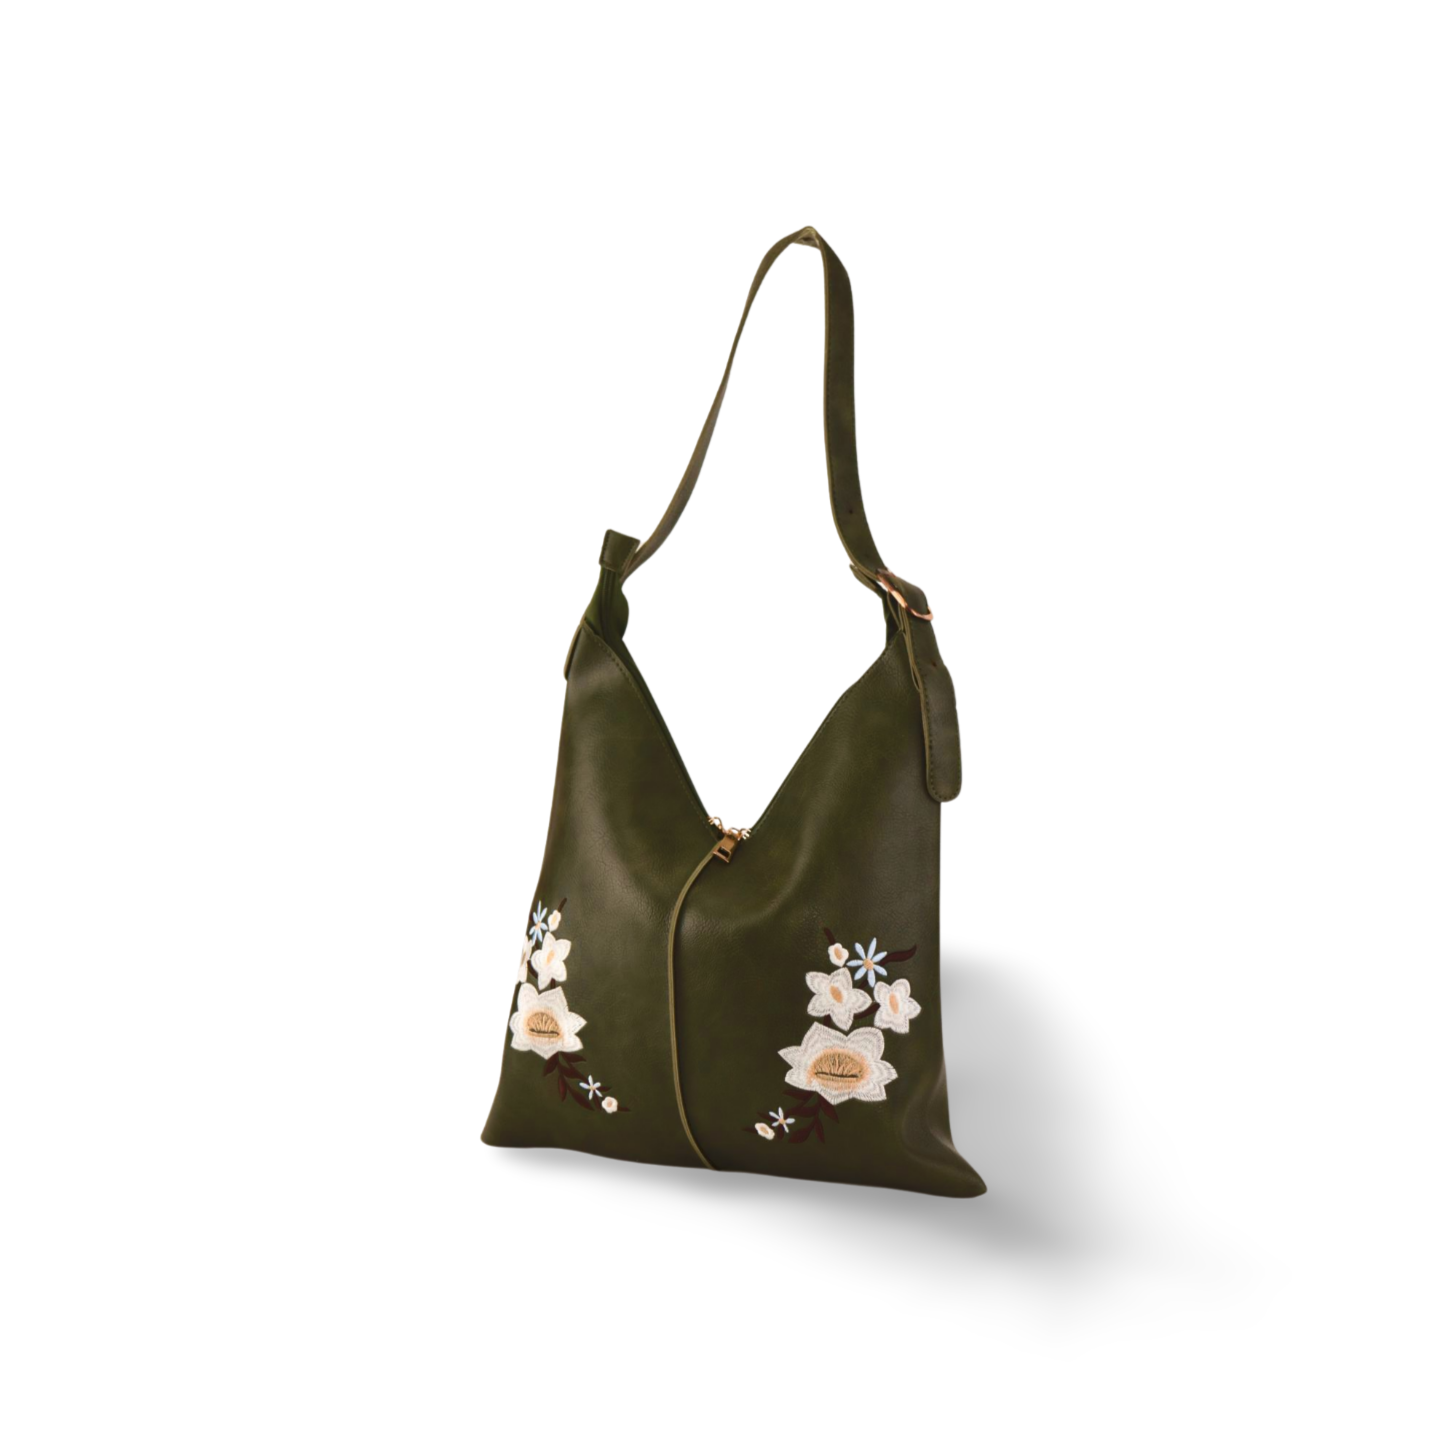 Flower Embroidery Pu Leather Handbag with Puff Ball Bag Charm!